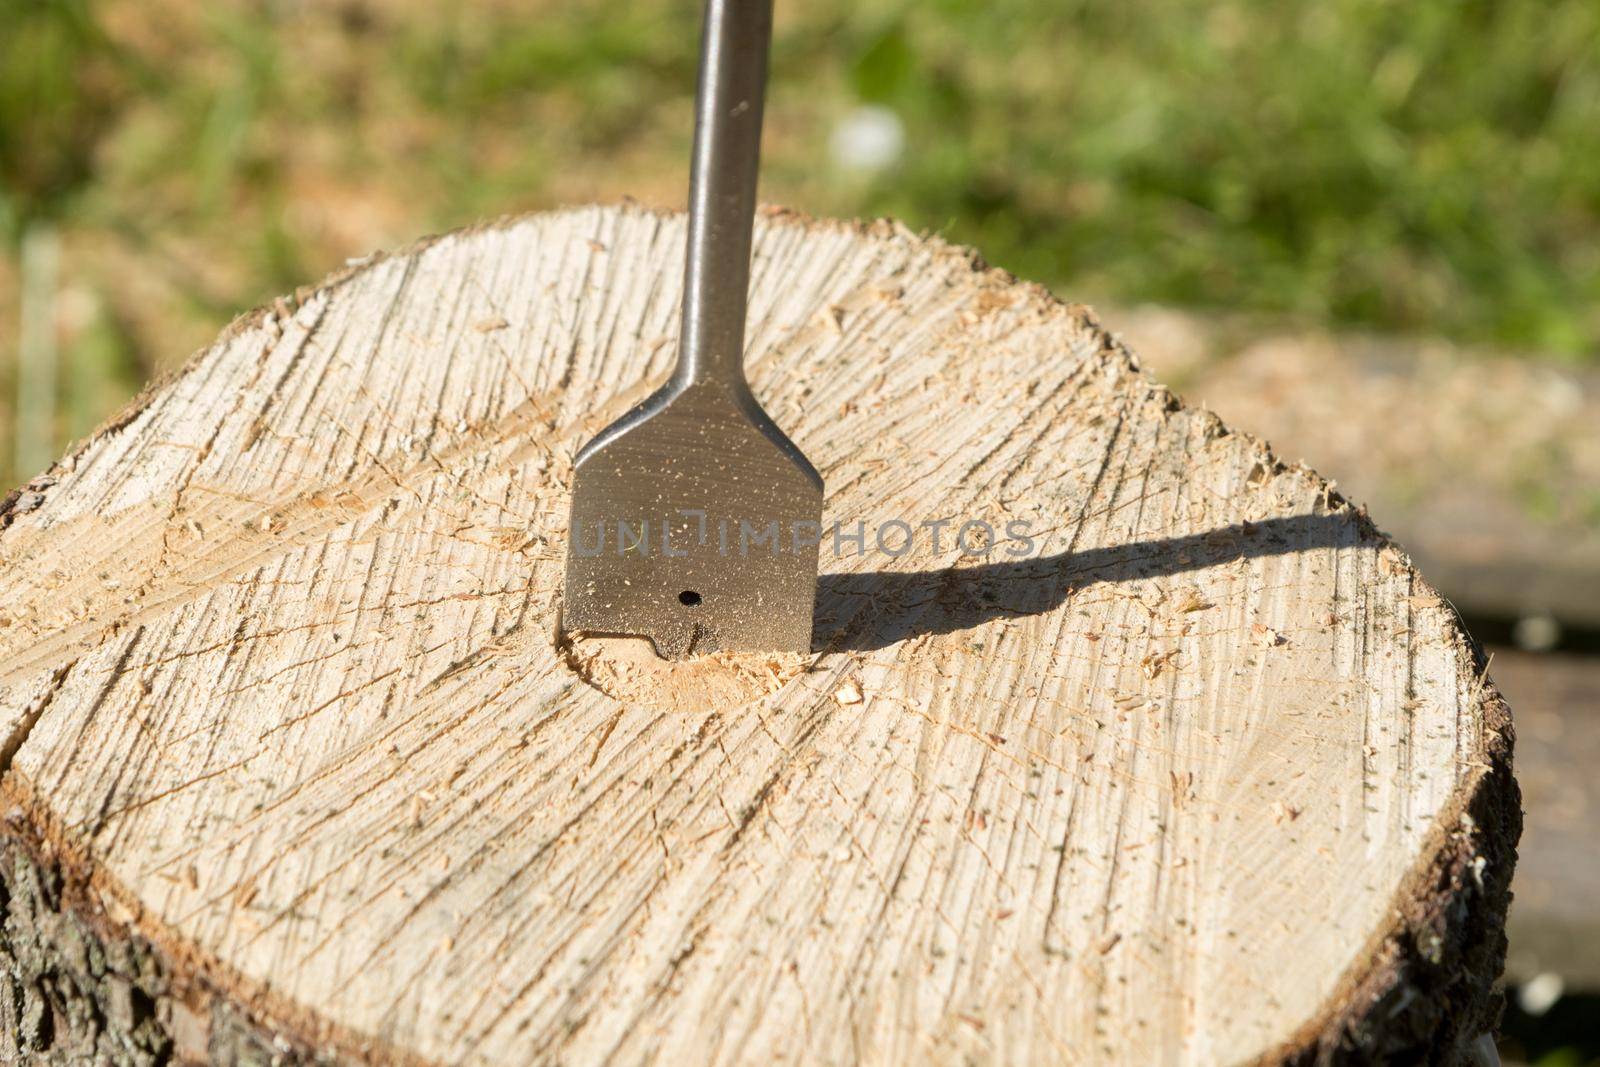 A carpenter's drill drills a tree stump